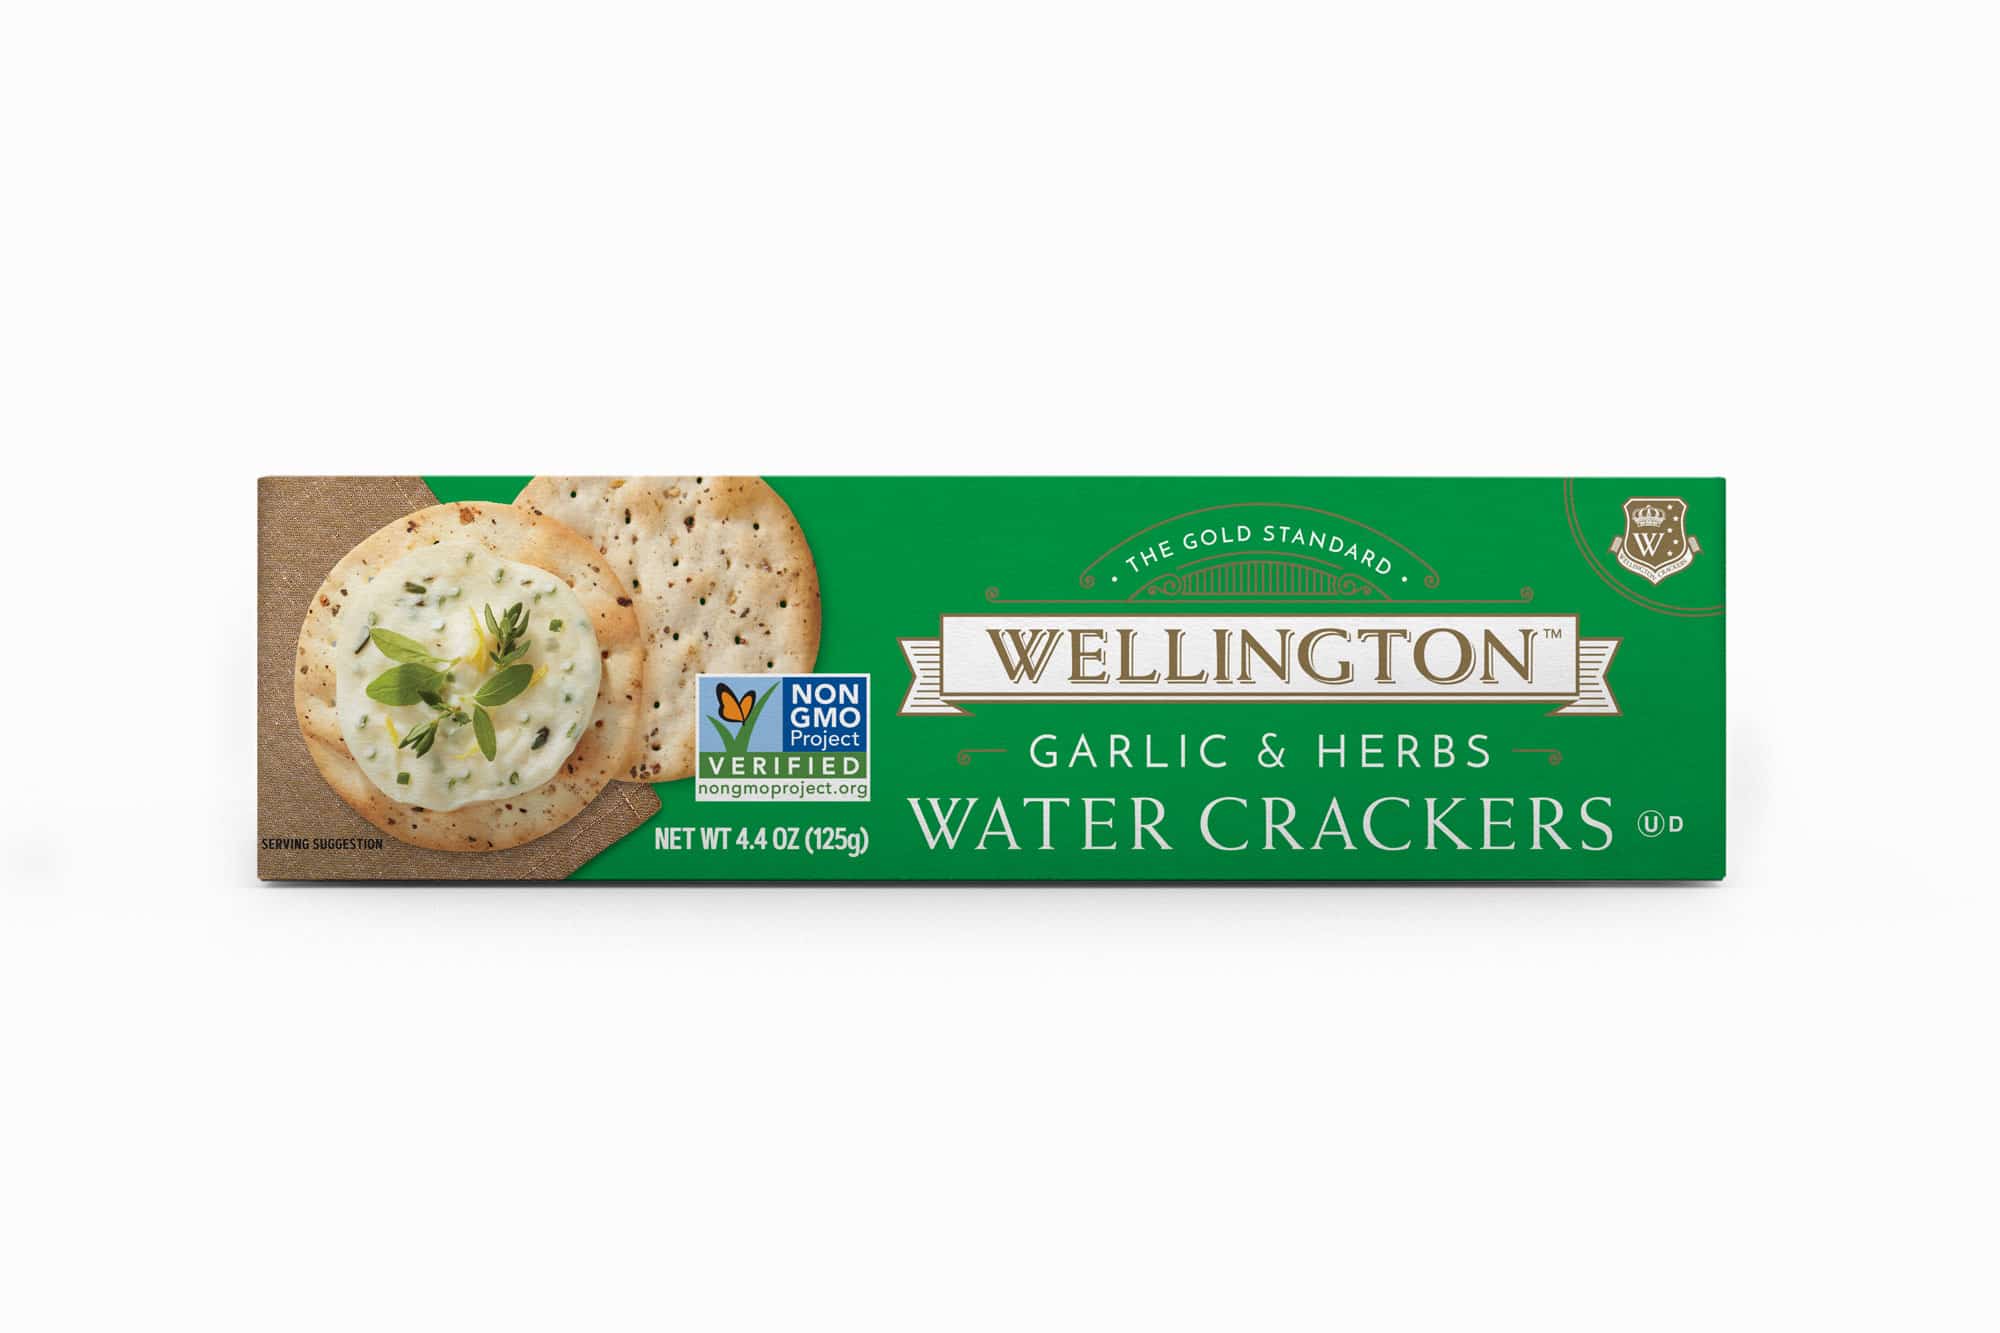 Garlic & Herbs Water Crackers